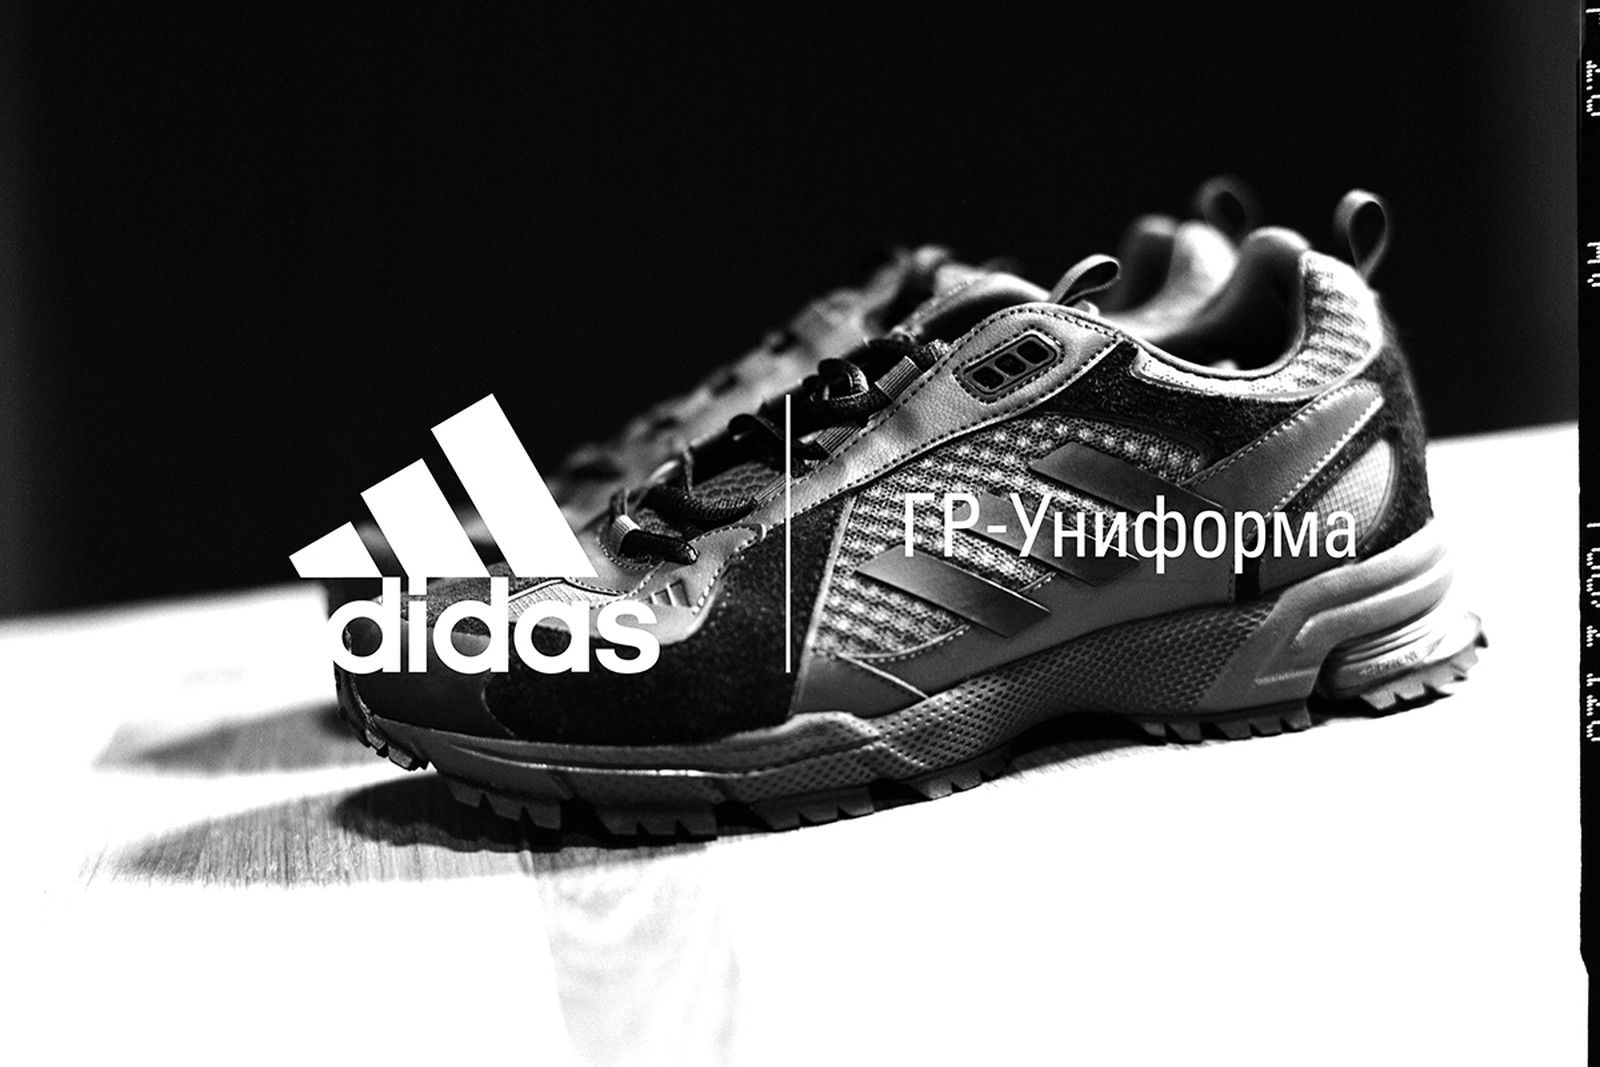 adidas gosha rubchinskiy shoes